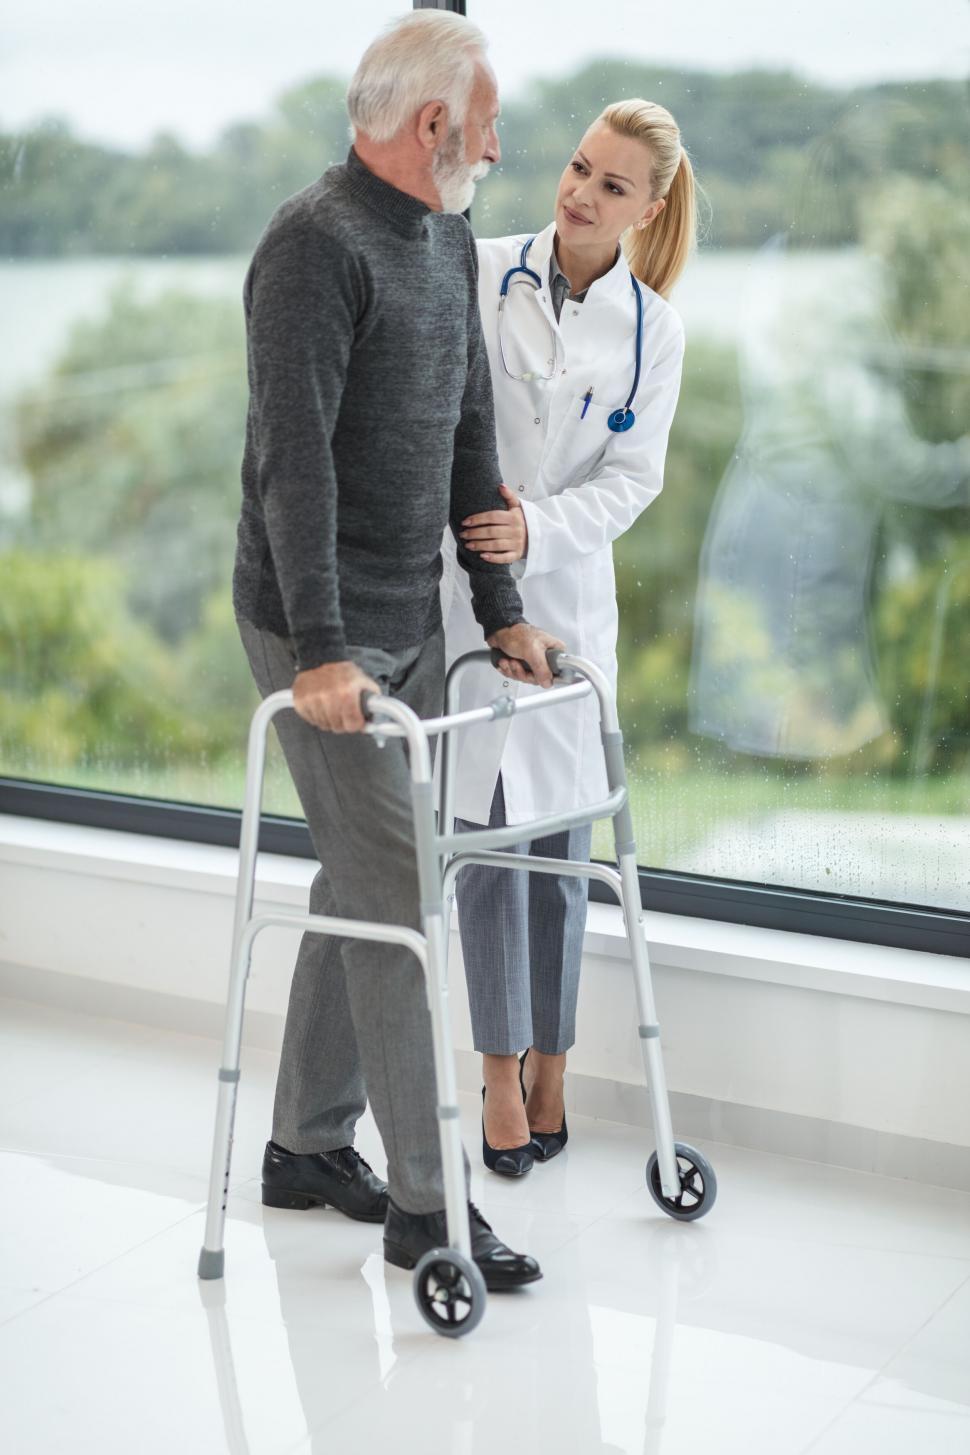 Free Image of Elderly man with walker talking to nurse 